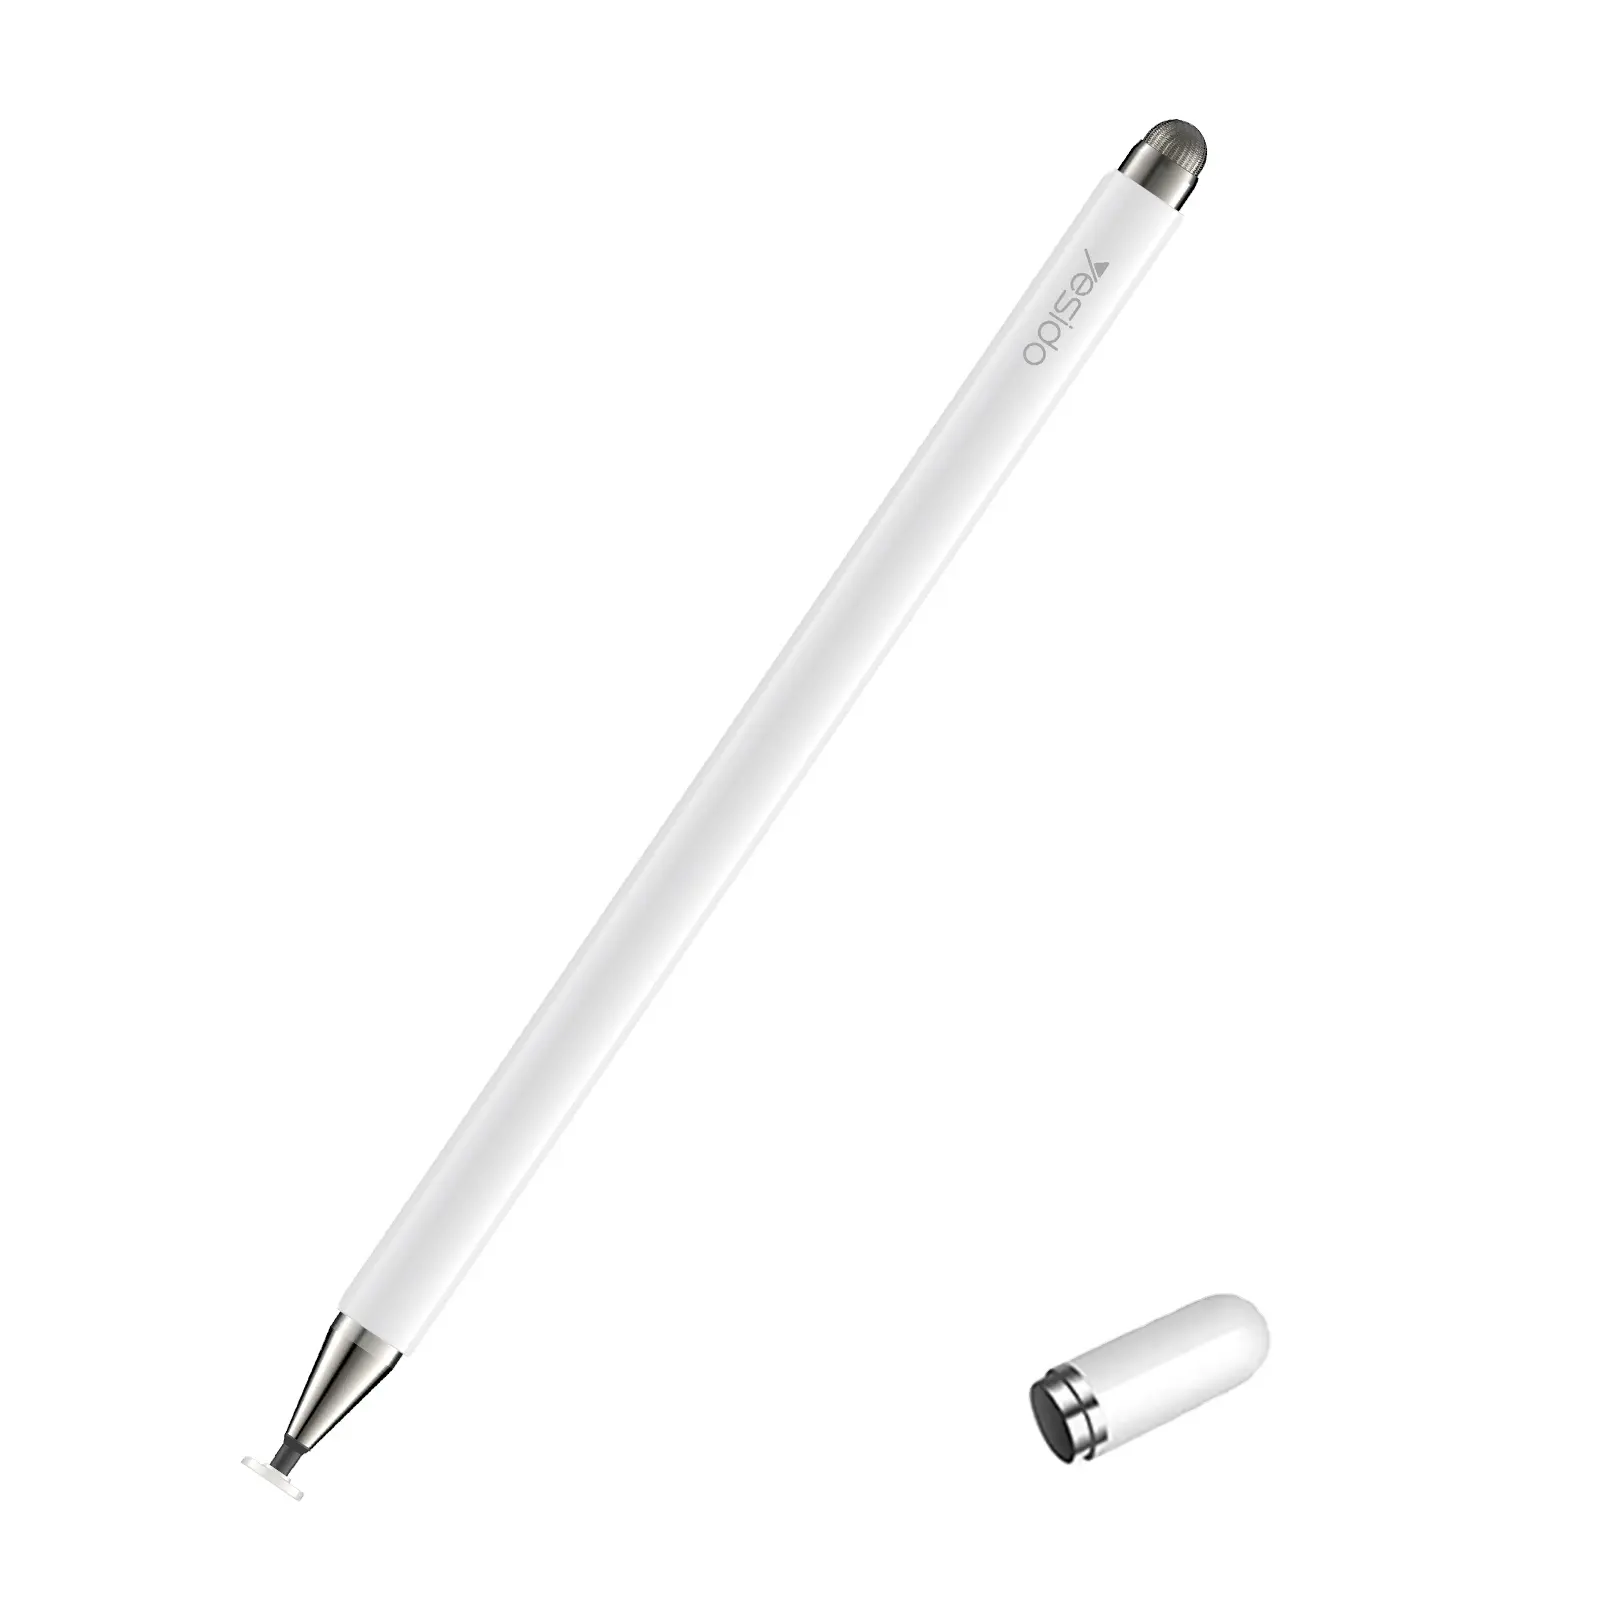 Tablet kapasitif aktif Universal, pena pensil Stylus sentuh ujung cakram tekanan 2 In 1 untuk IP Android Samsung Laptop